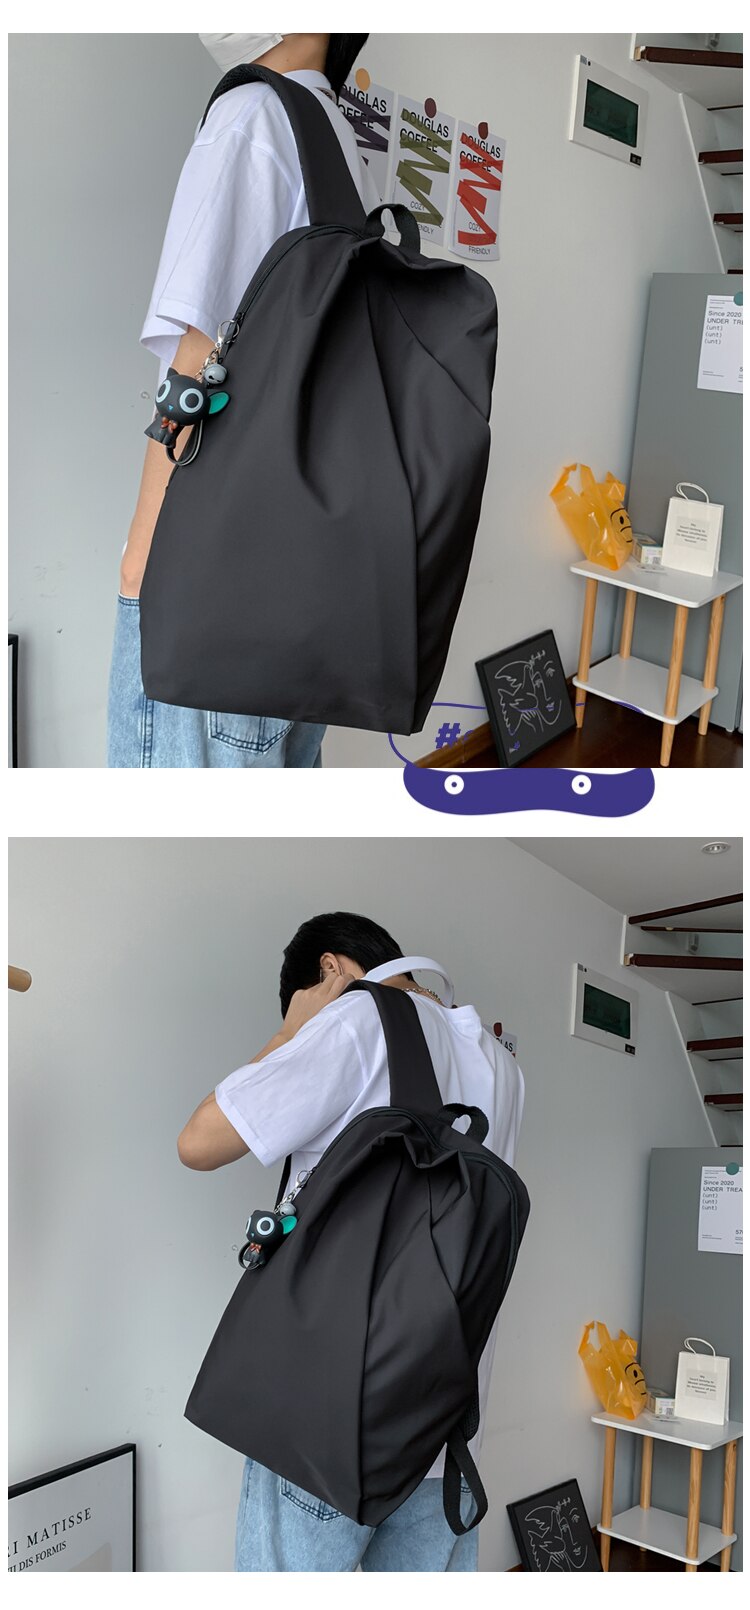 18 Inch Minimal Fashion School Laptop Backpack